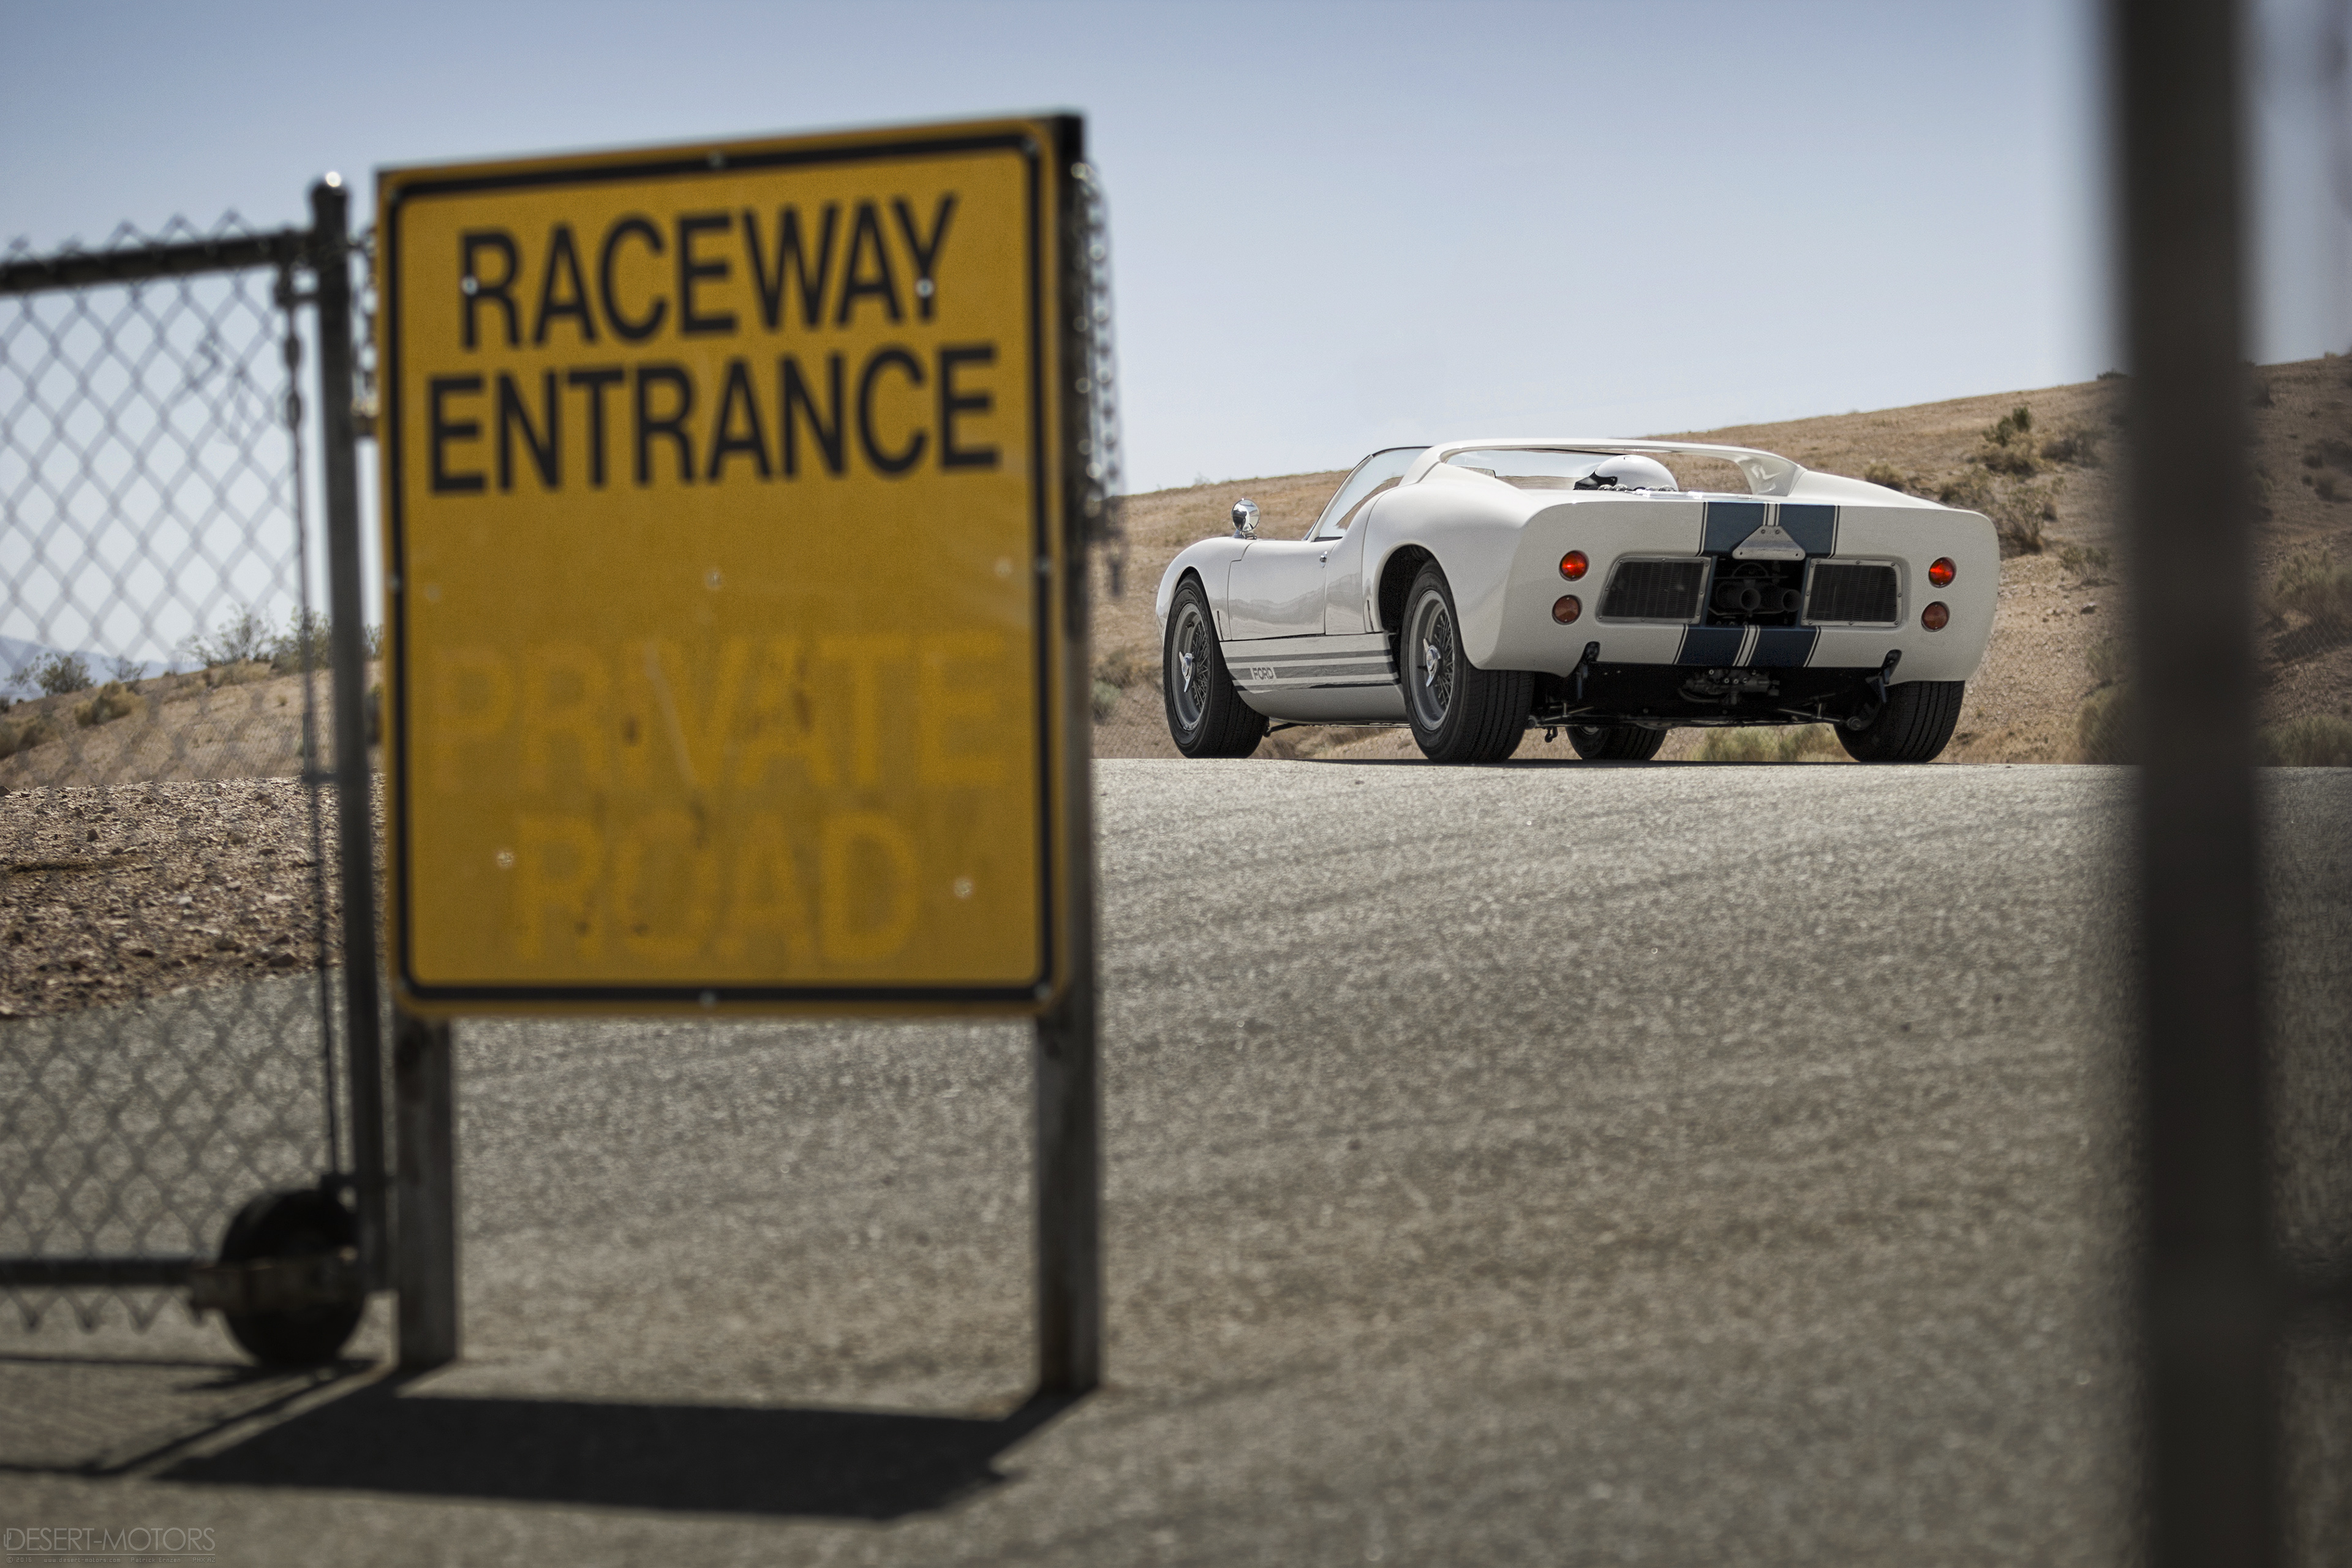 Ford GT40 Prototypes White Cars Race Cars Classic Car Racing Stripes Raceway Race Tracks Desert 3840x2560